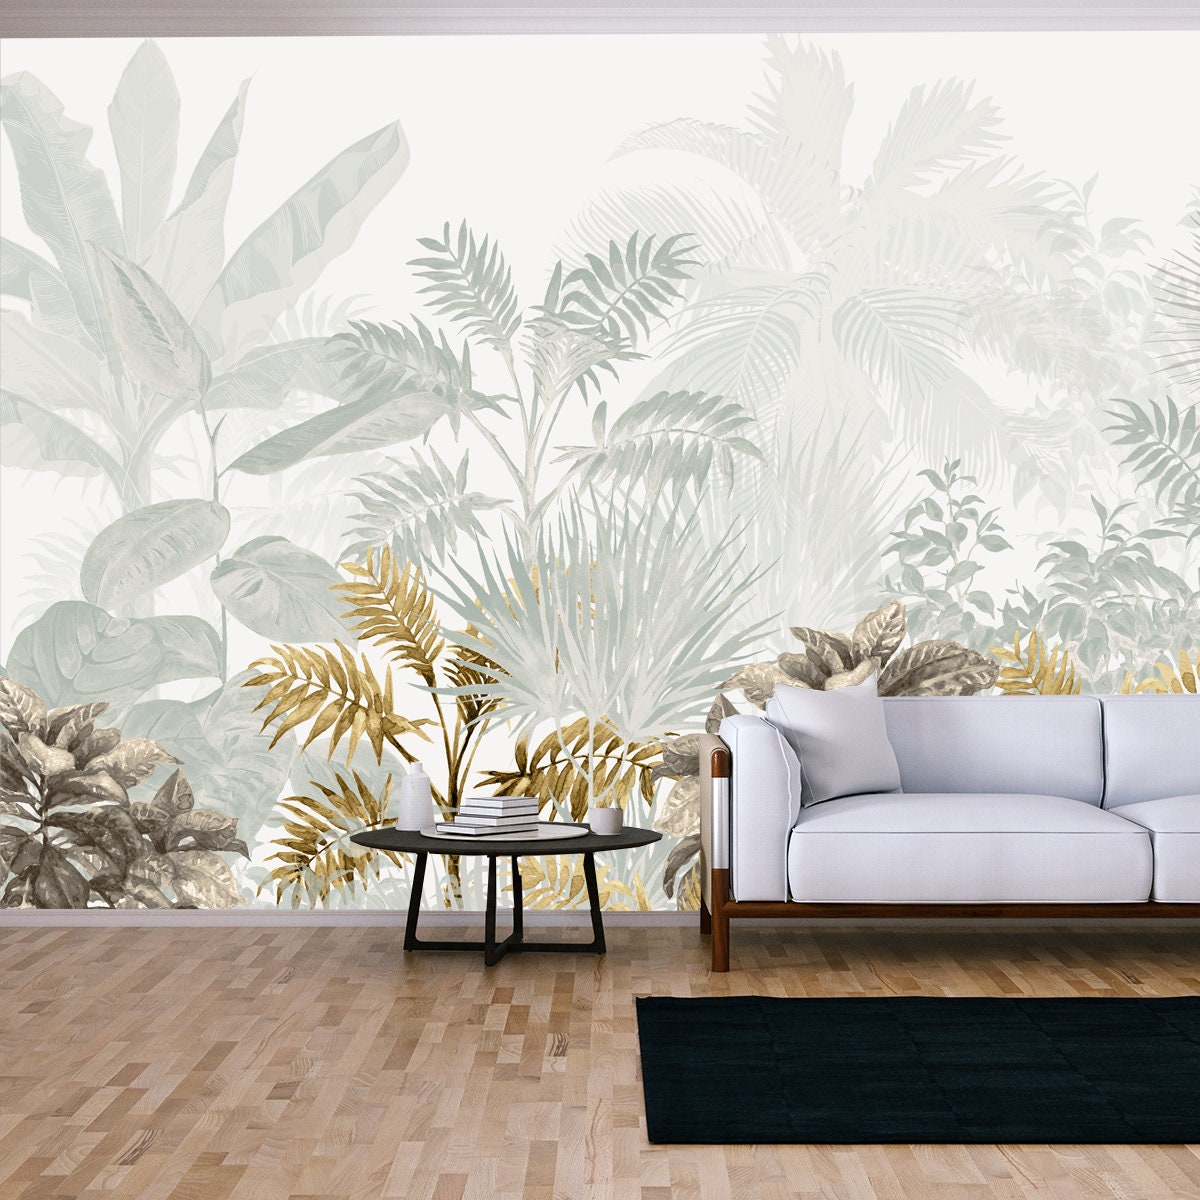 Tropical Leaf Wallpaper Design, Watercolor Texture, Nature Background Wallpaper Living Room Mural